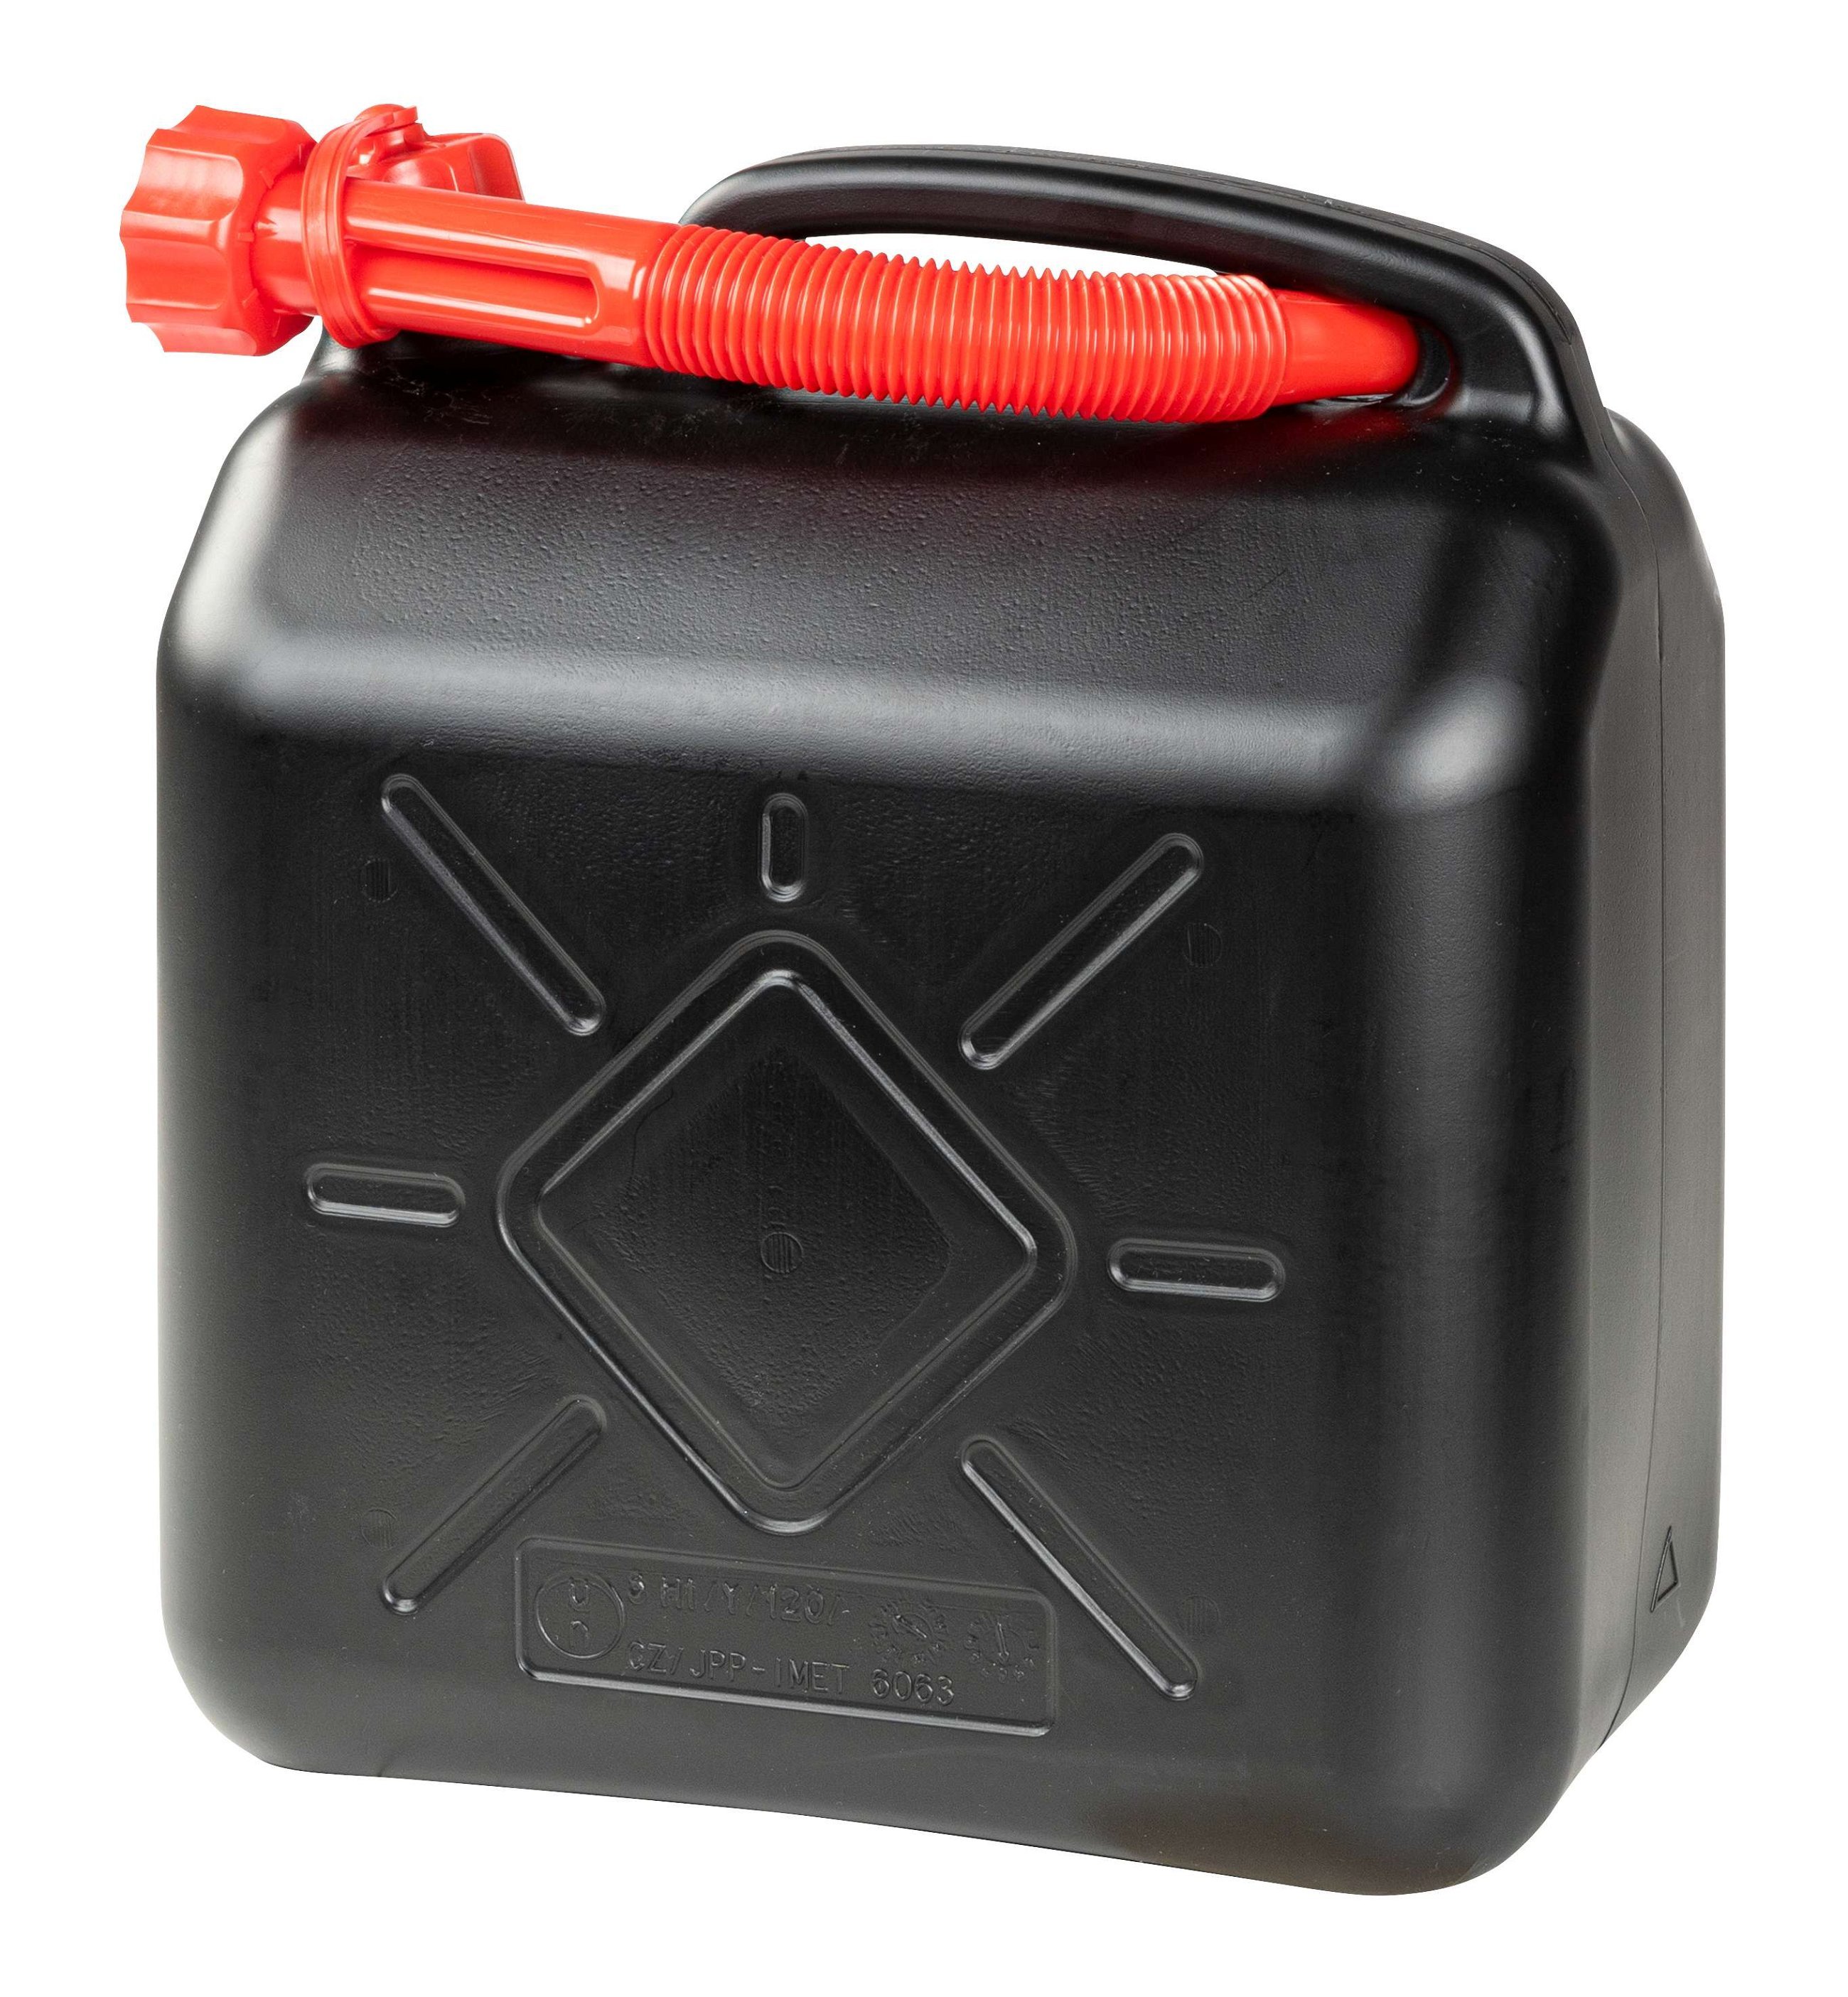 Benzineblik 10 liter, brandstofblik UN-gekeurd, reserveblik met veiligheidssluiting zwart/rood